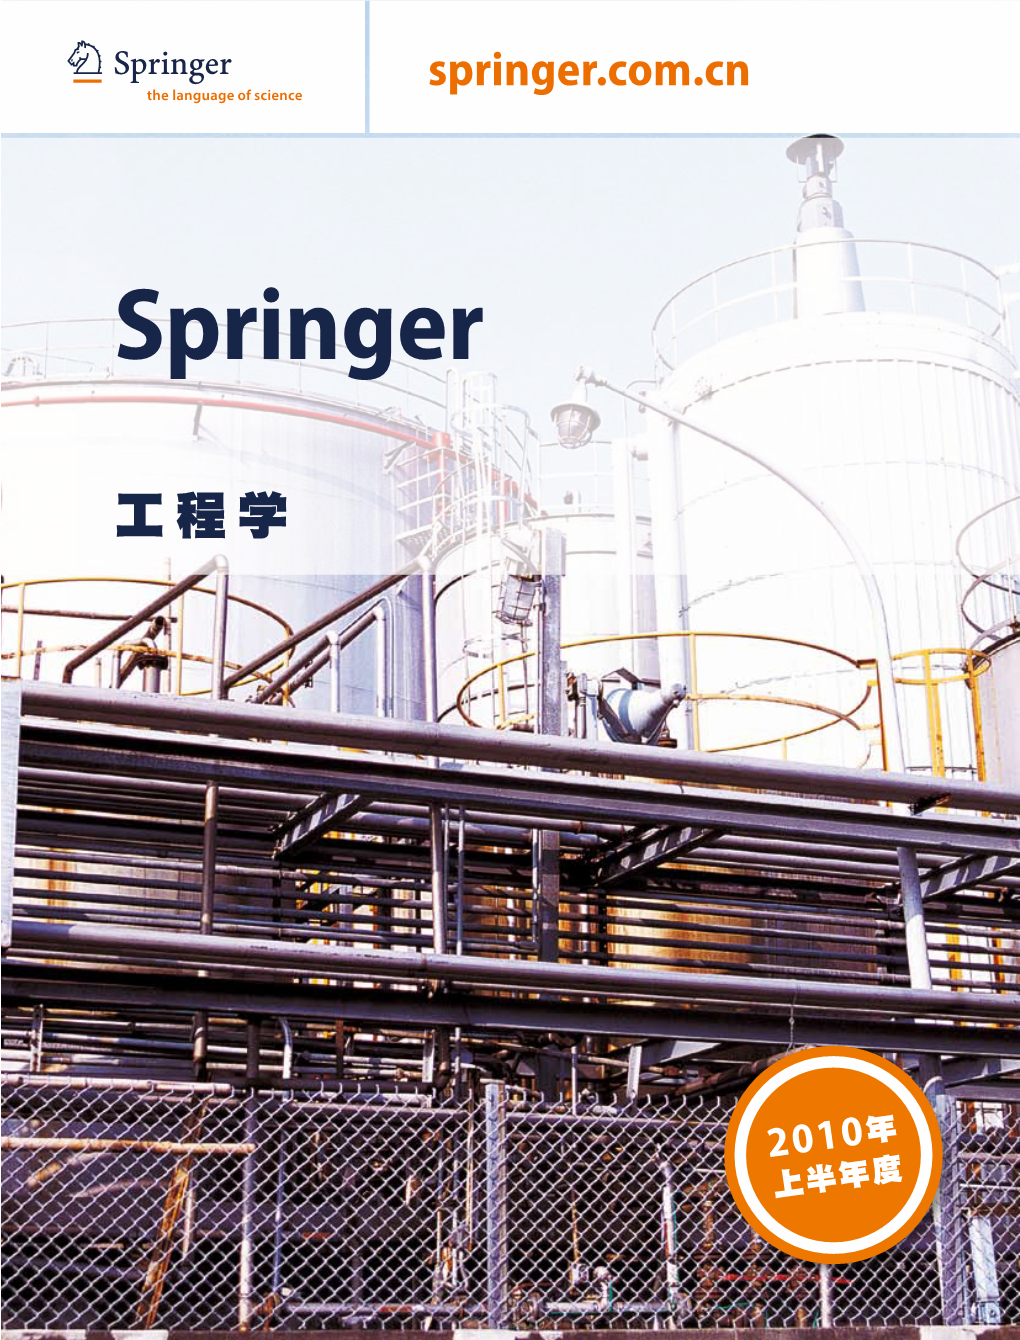 Springer.Comspringer.Com.Cn